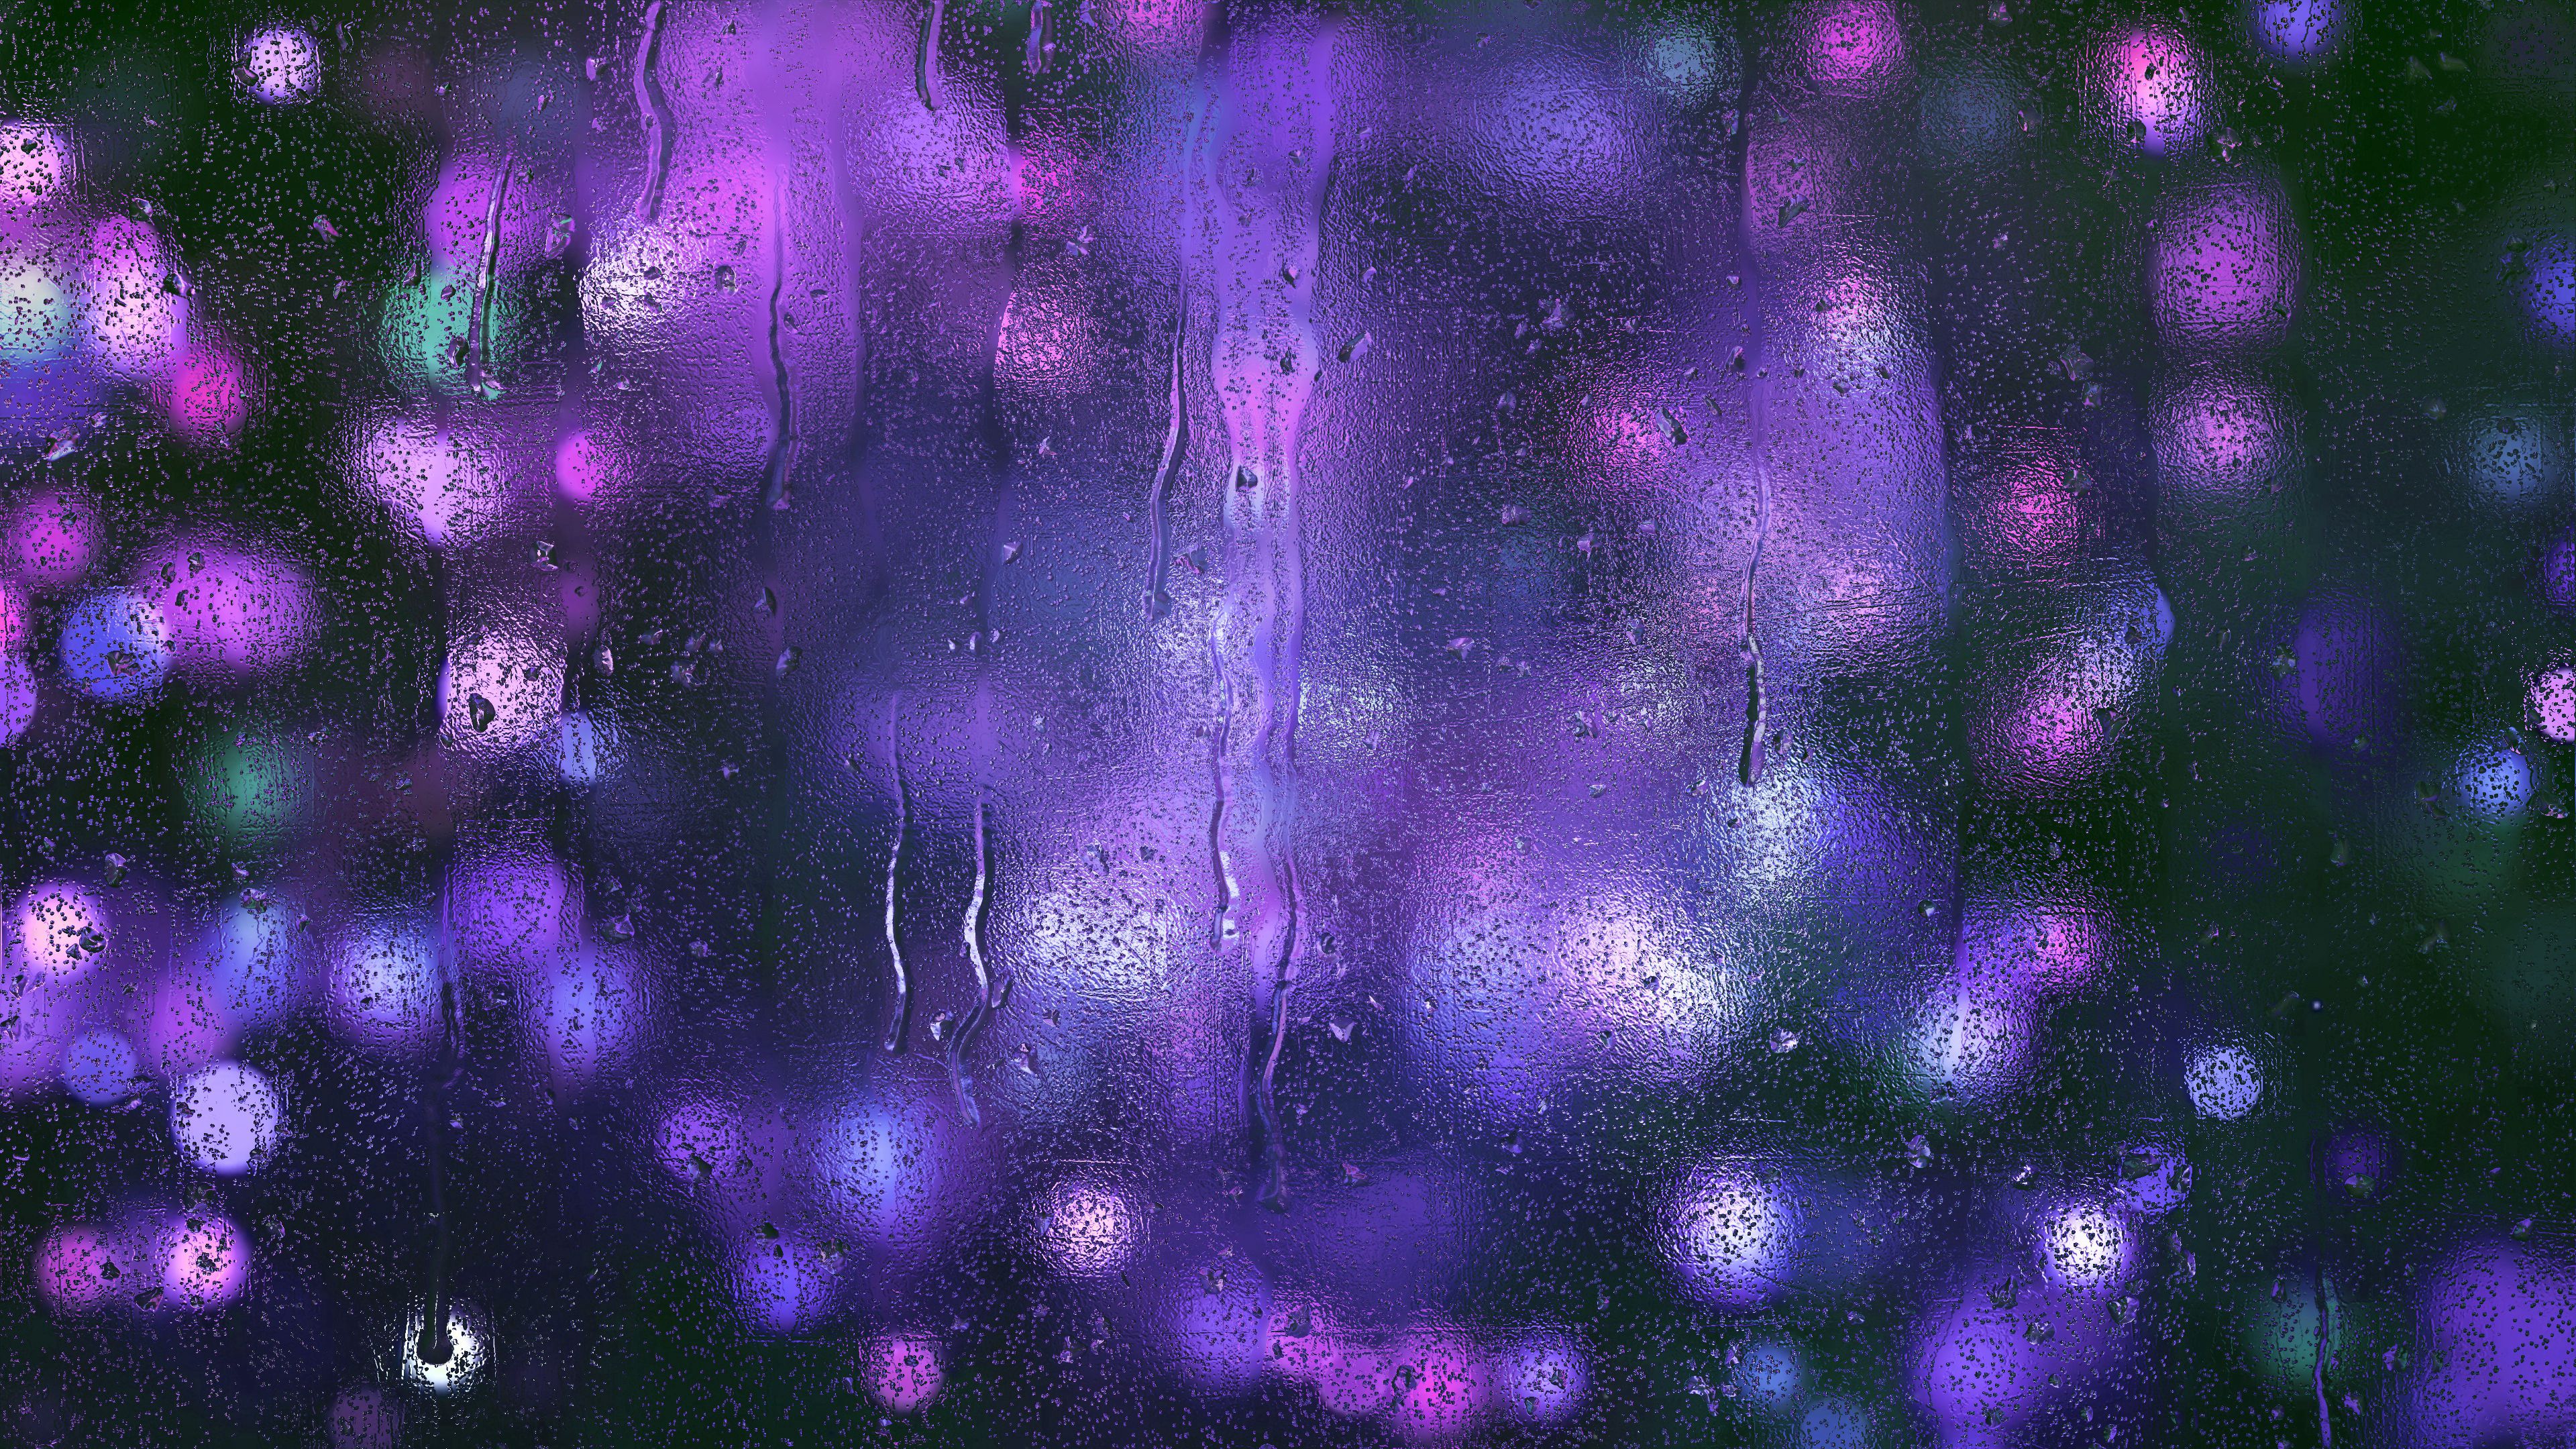 Phone Wallpaper (No watermarks) glare, violet, drops, glass